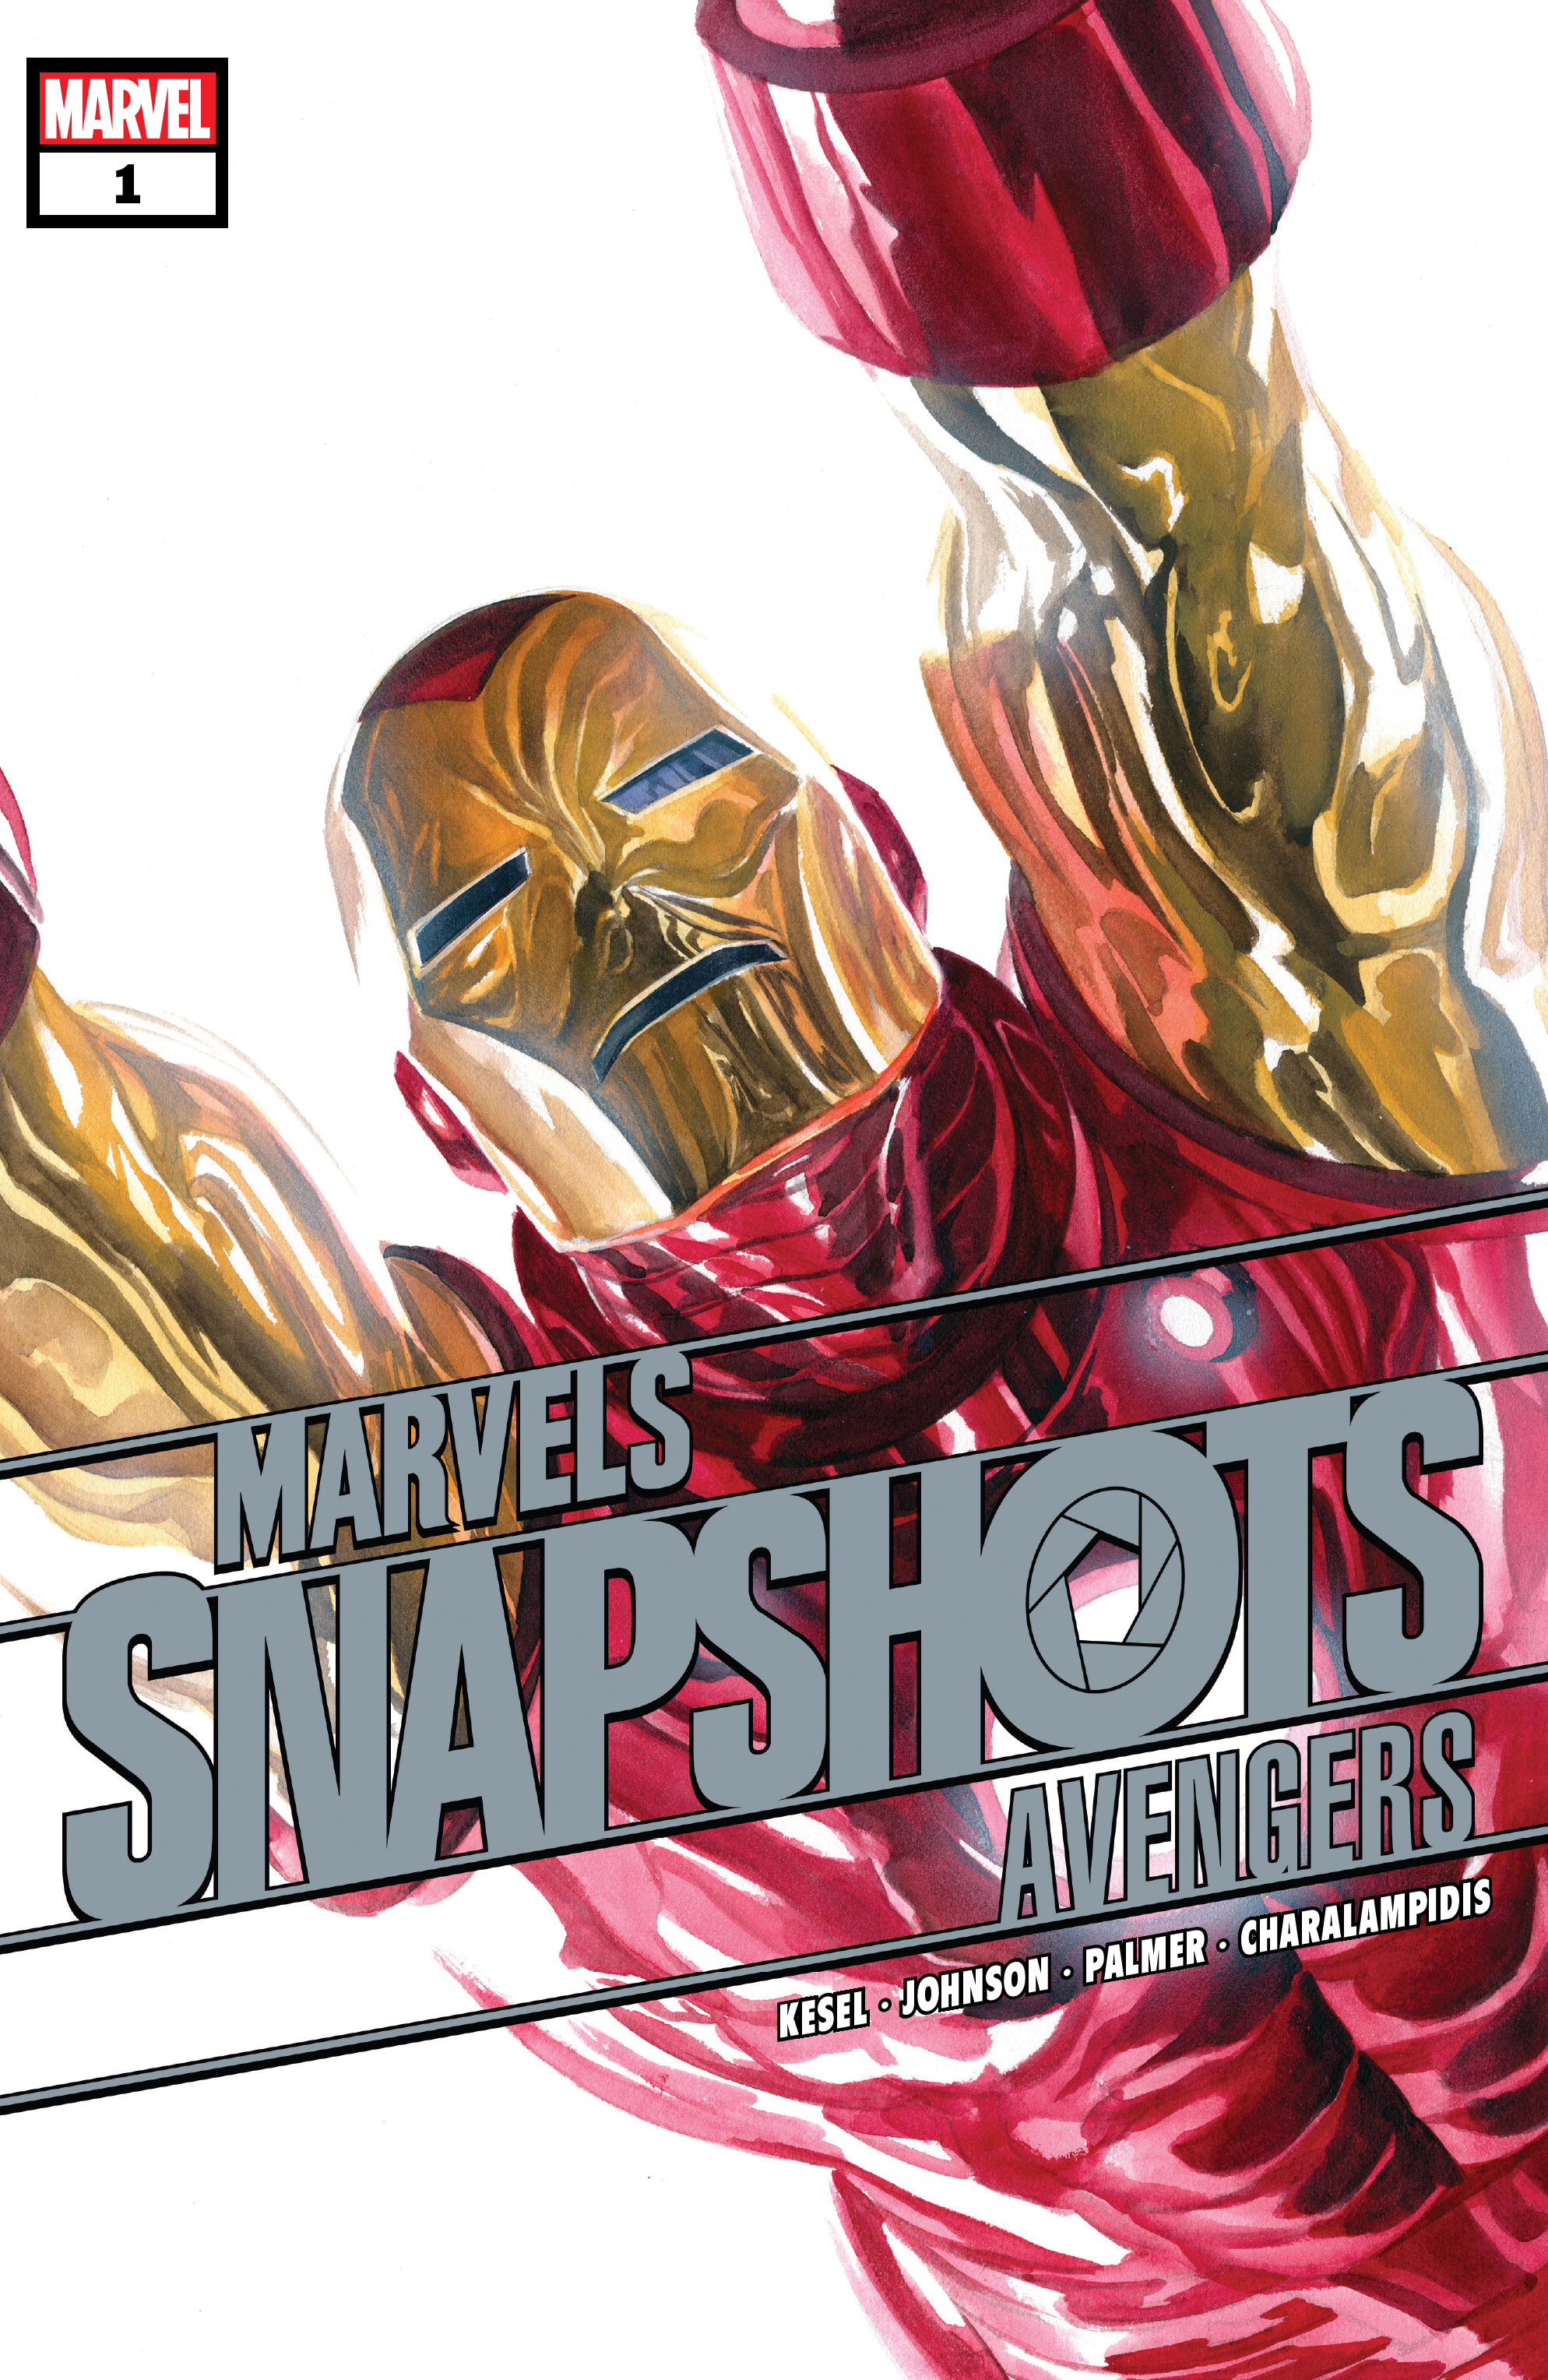 Read online Marvels Snapshot comic -  Issue # Avengers - 1